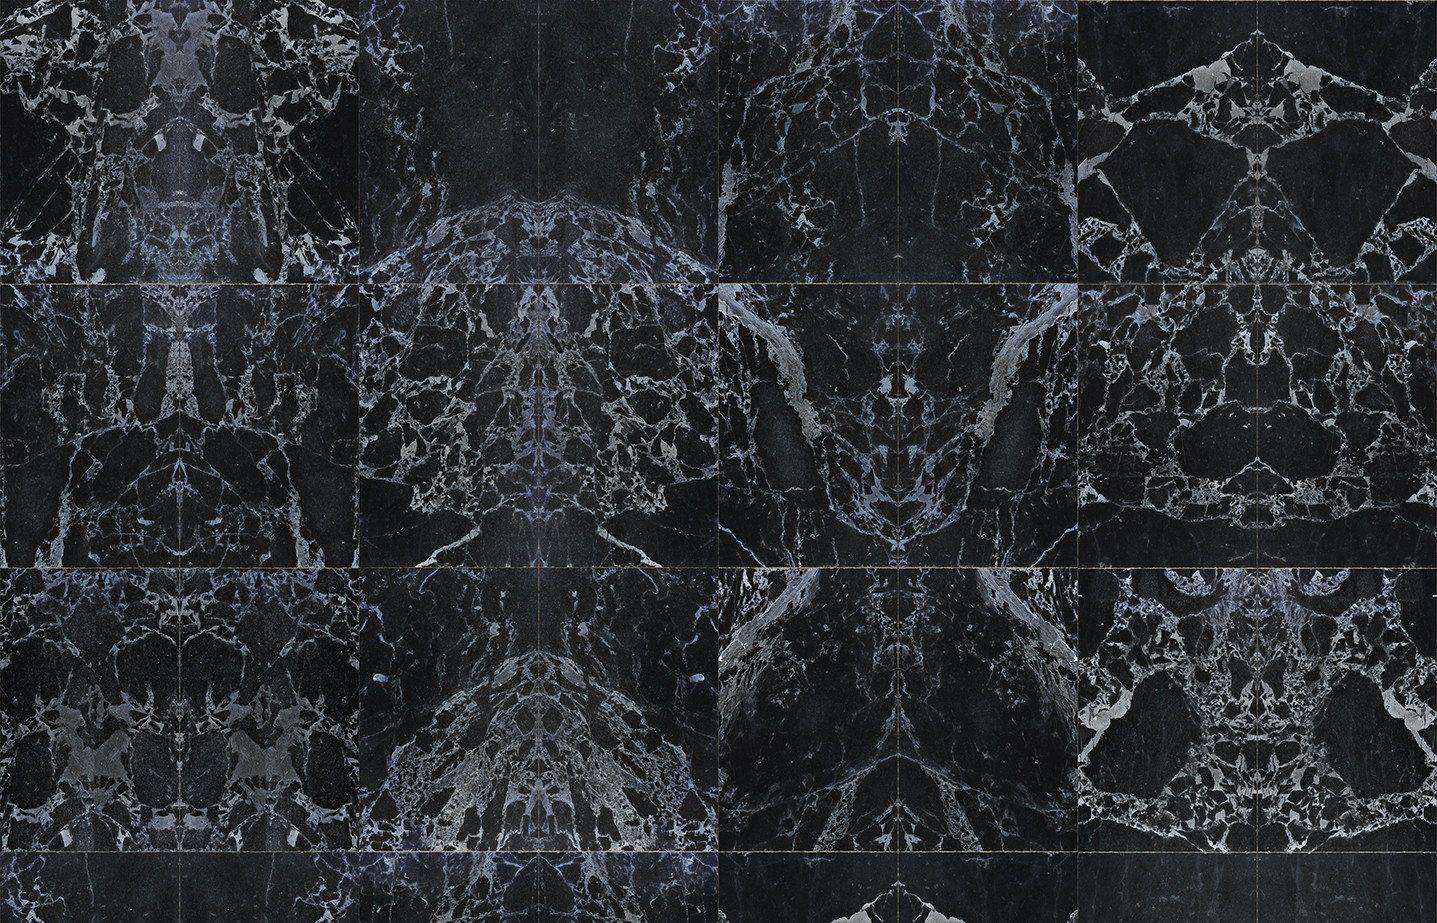 Black Marble Wallpaper design by Piet Hein Eek for NLXL Wallpaper